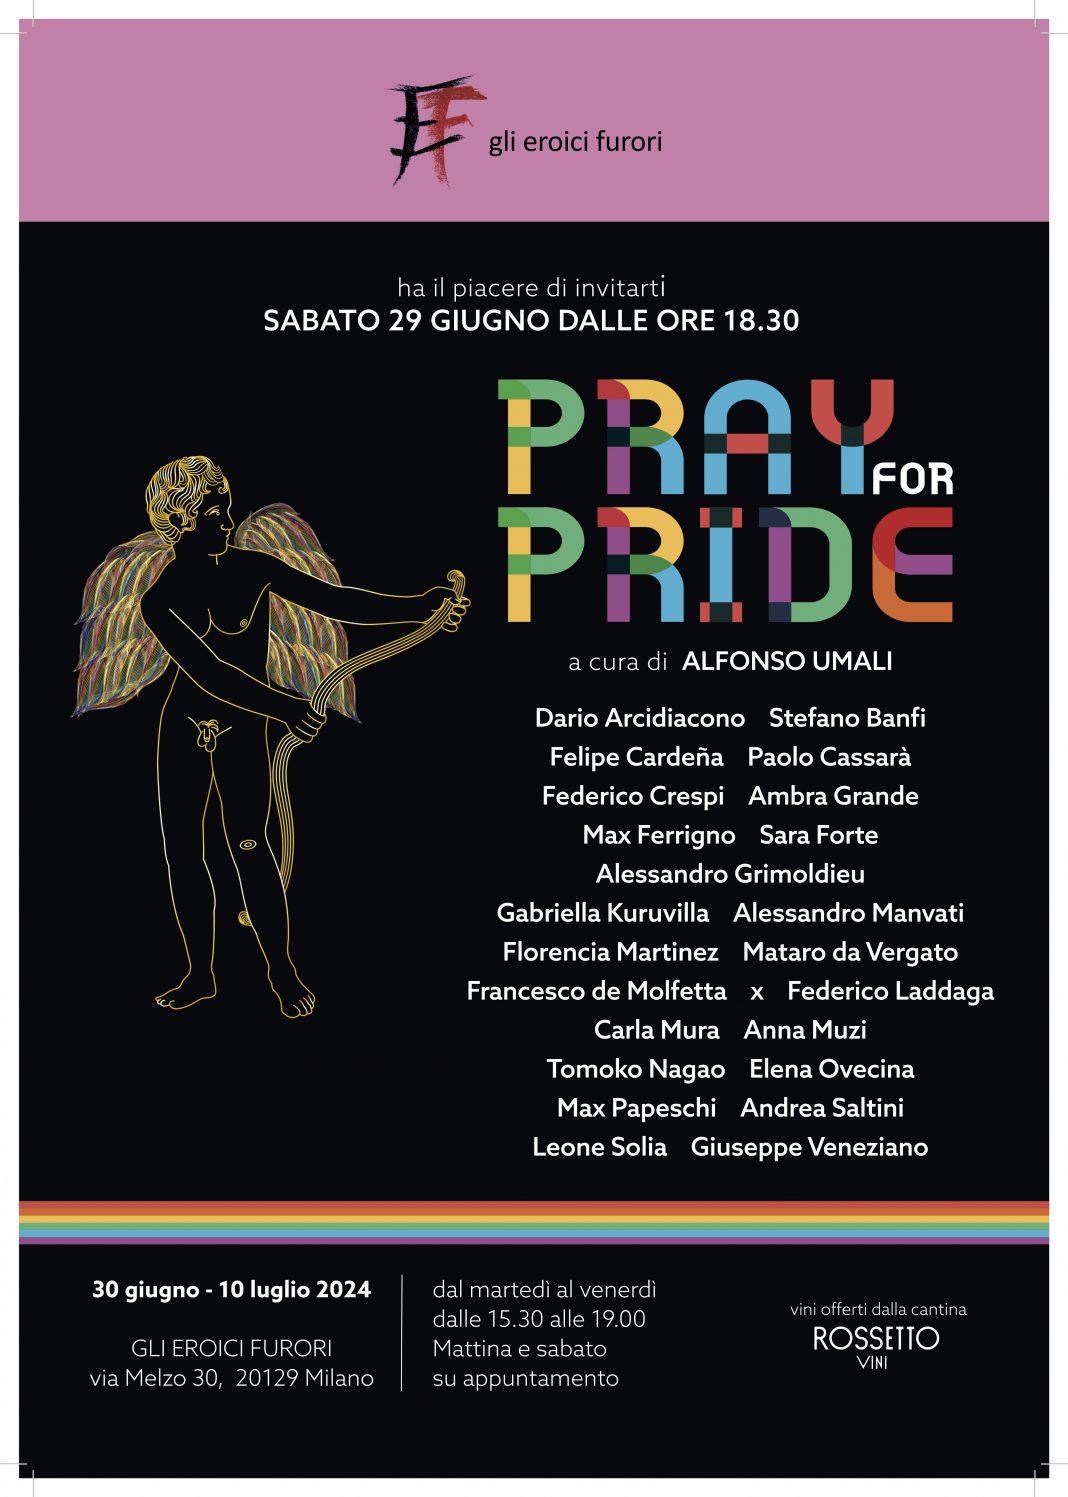 Pray for Pridehttps://www.exibart.com/repository/media/formidable/11/img/59f/35x50_locandina-copia-1068x1497.jpeg